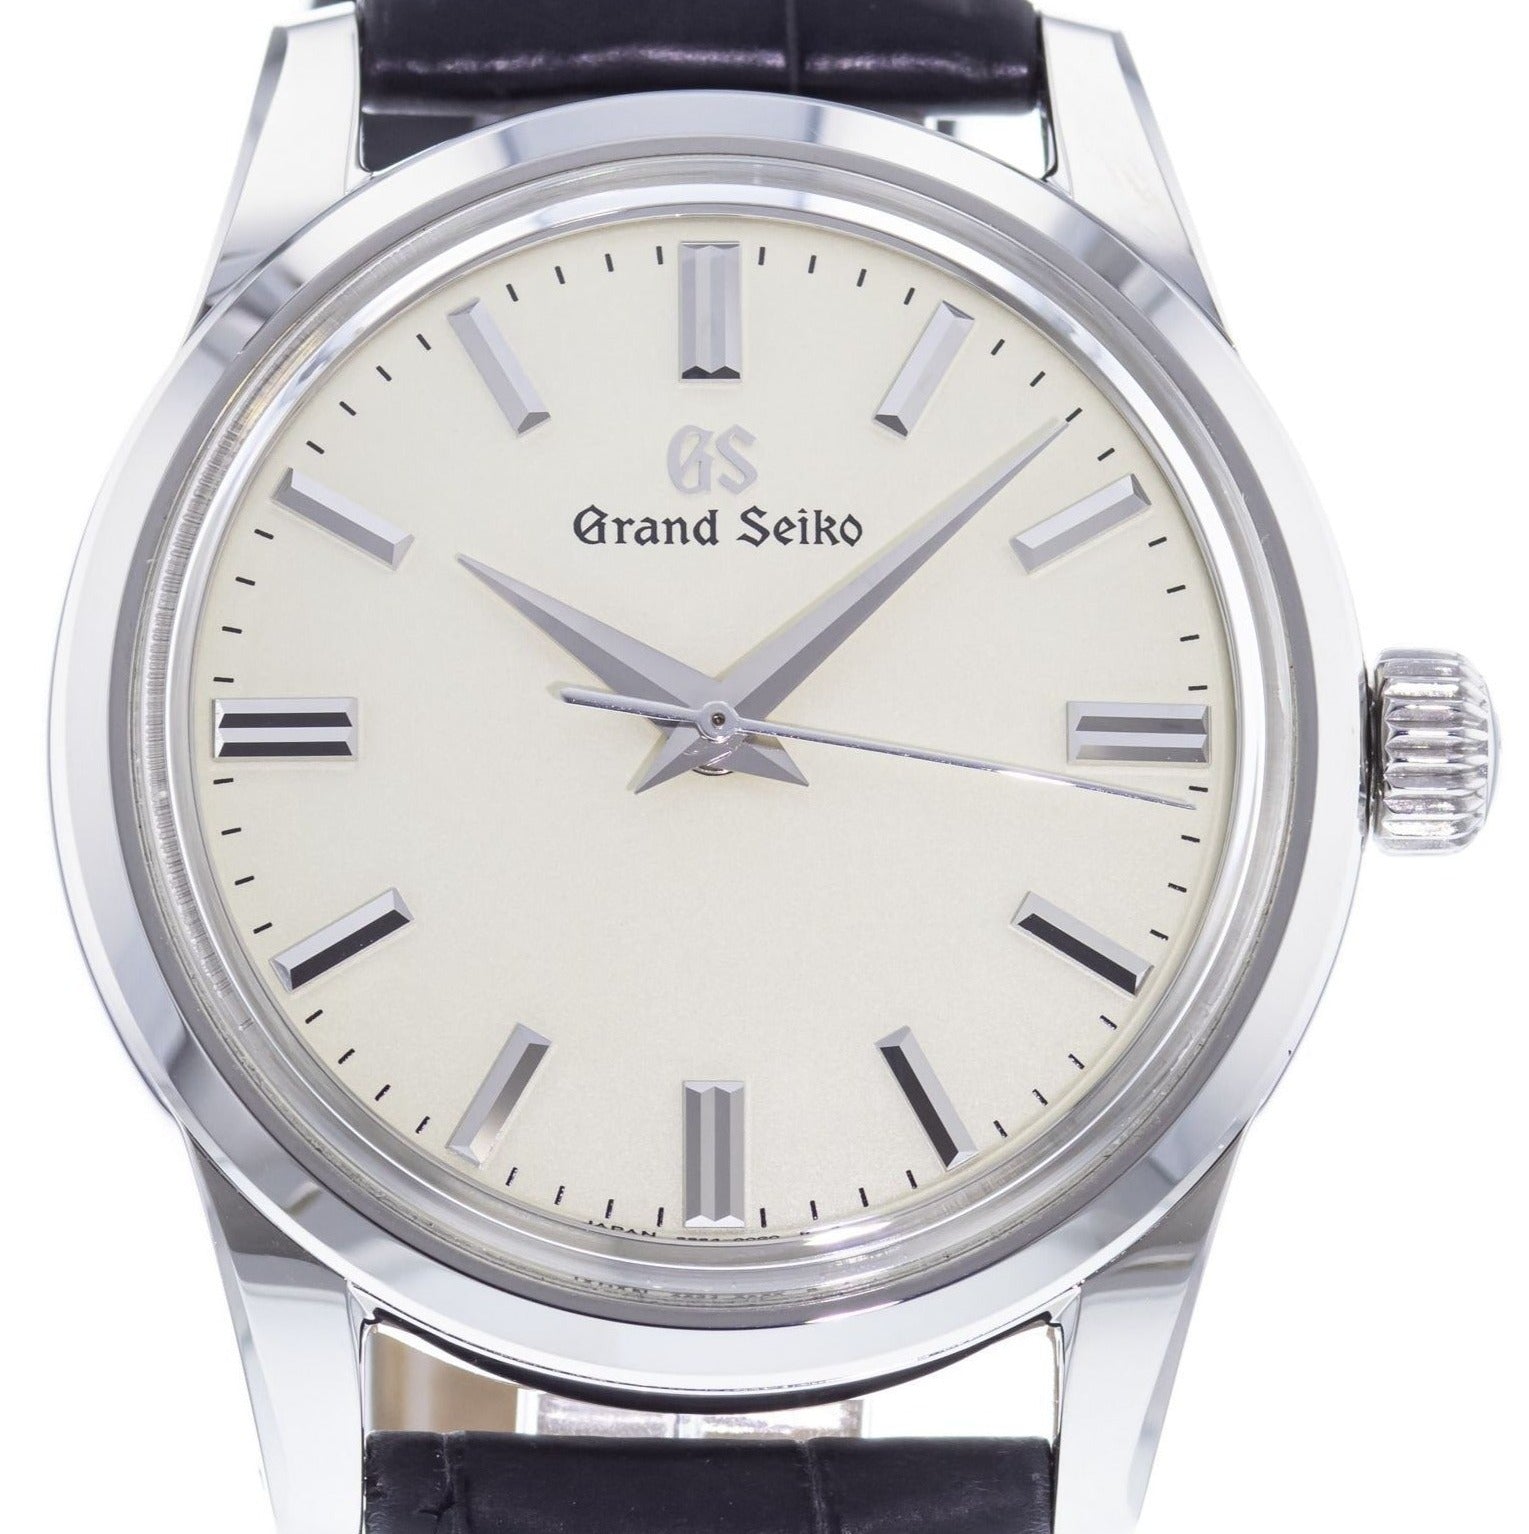 Grand Seiko Elegance Collection Crocodile Leather Watch | Harley's Time LLC